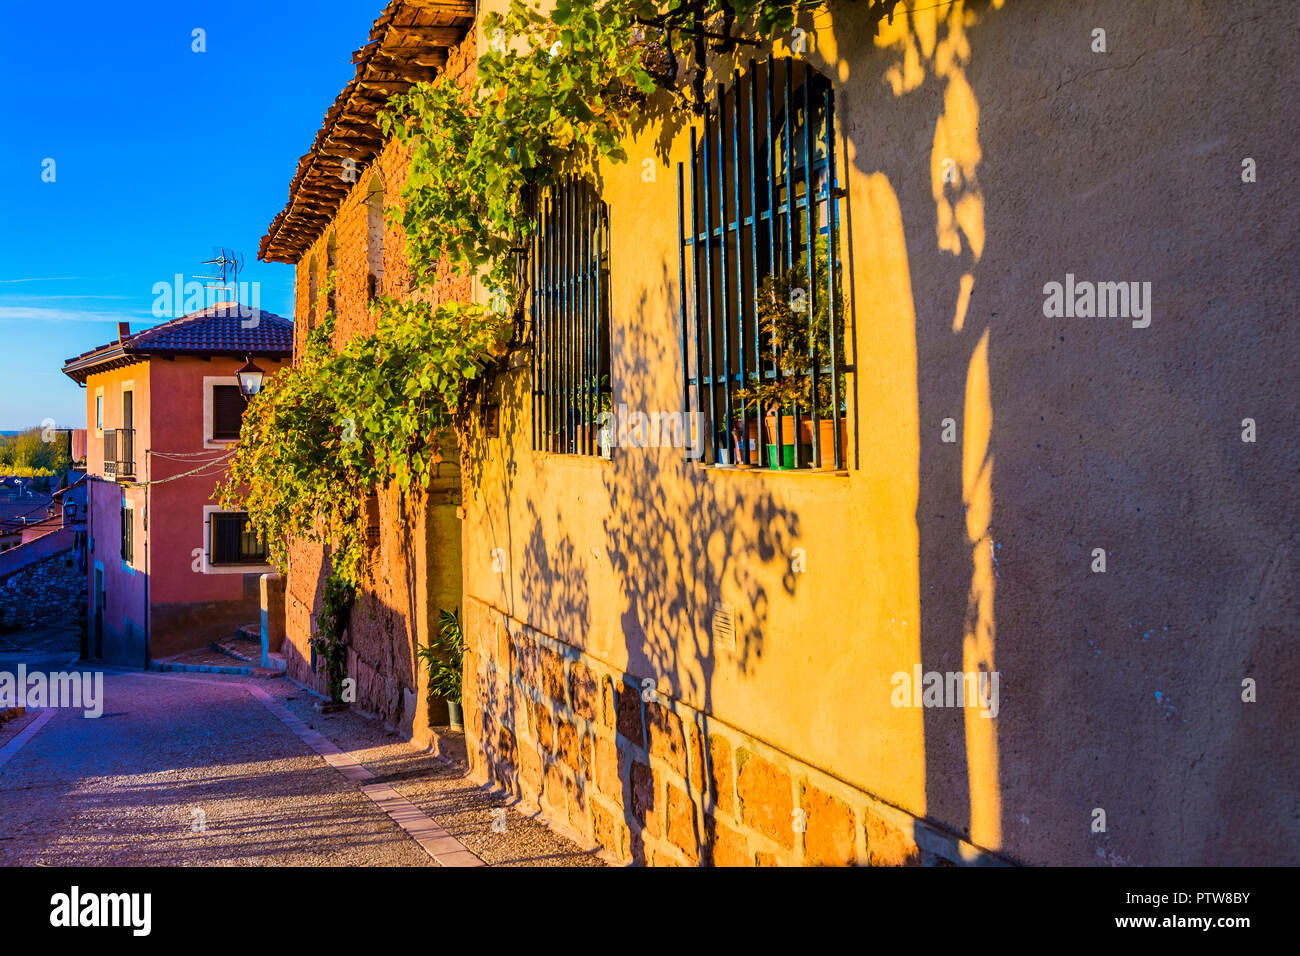 Historical center street. Ayllon, Segovia, Castilla y leon, Spain, Europe. Stock Photo